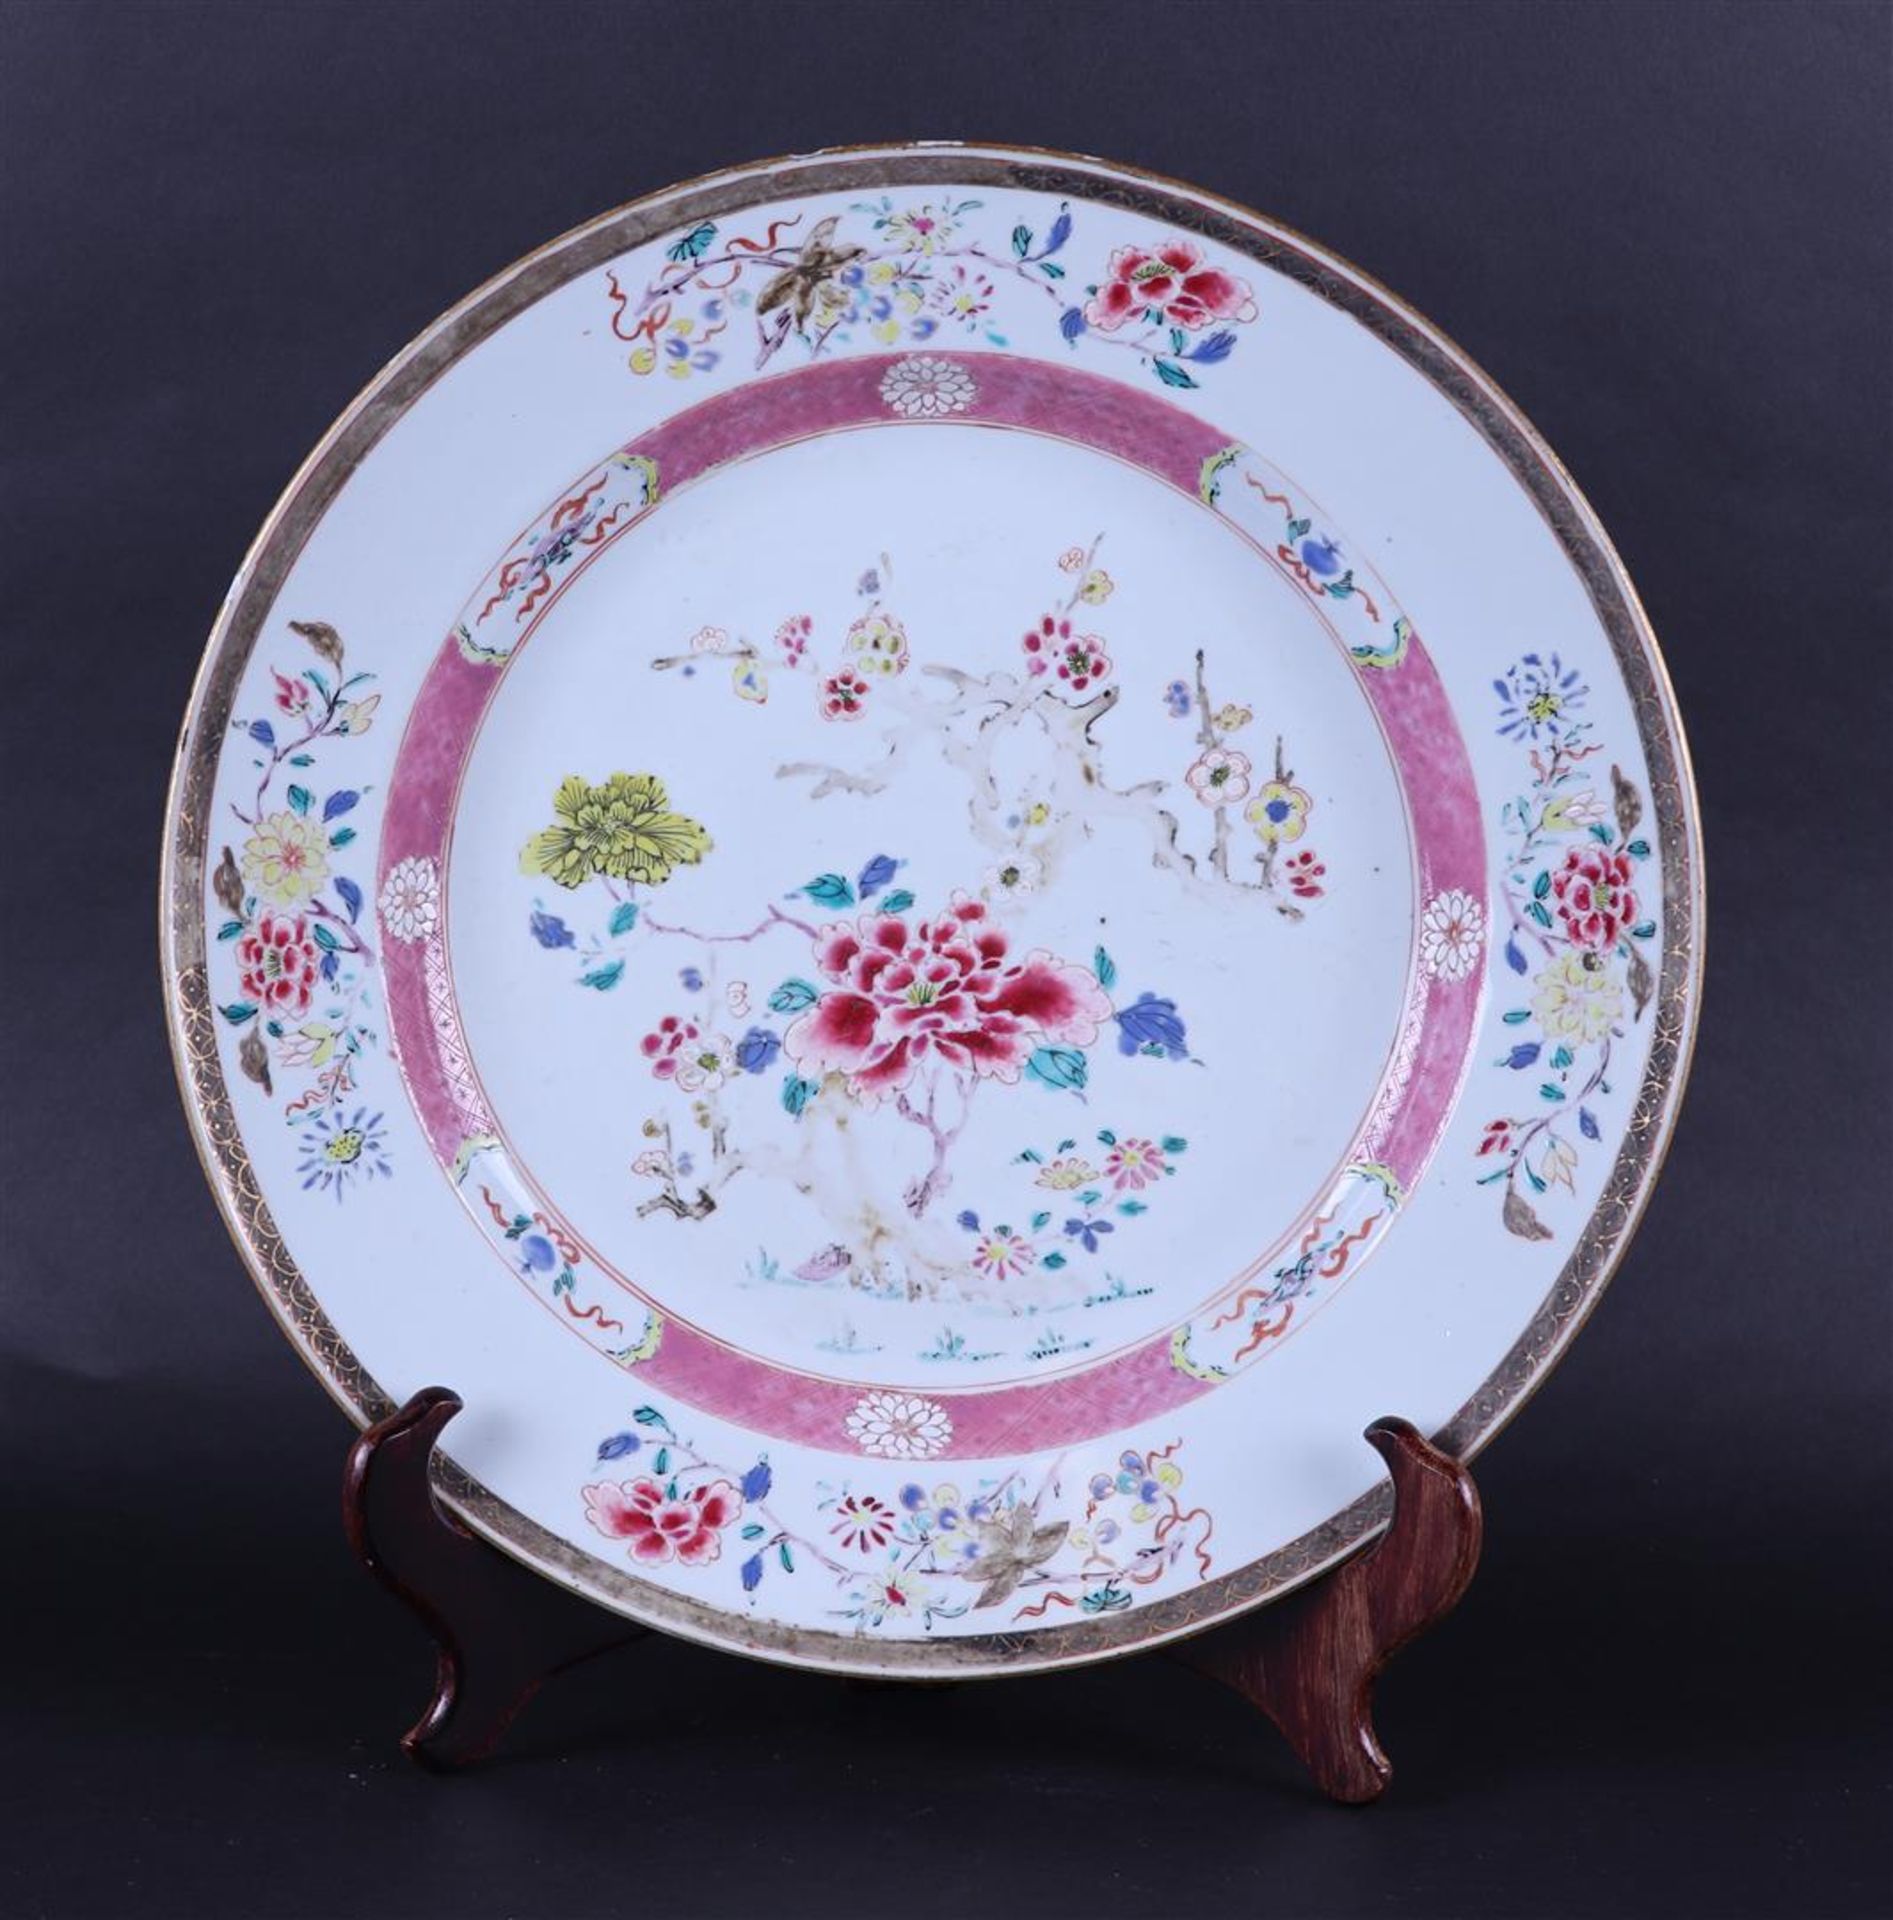 A large porcelain famile rose dish. China, 18th century.